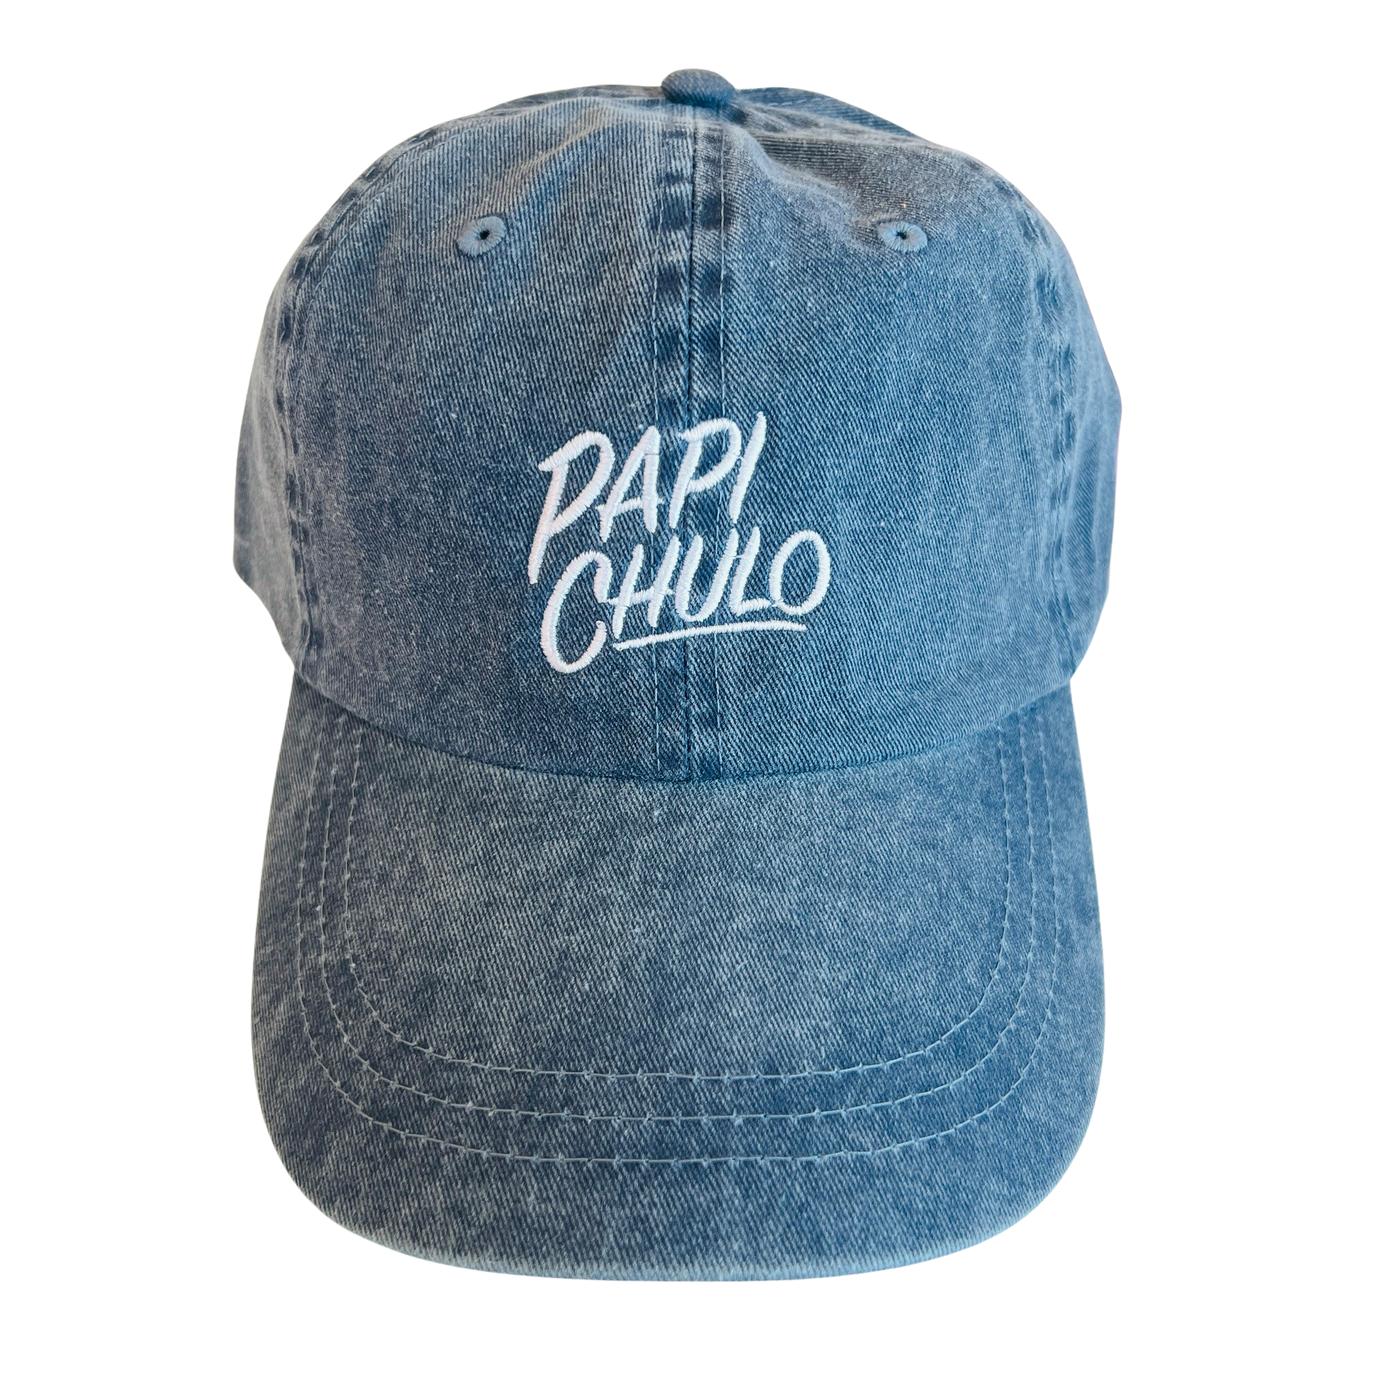 Papi Chulo Hat - Heathered Blue